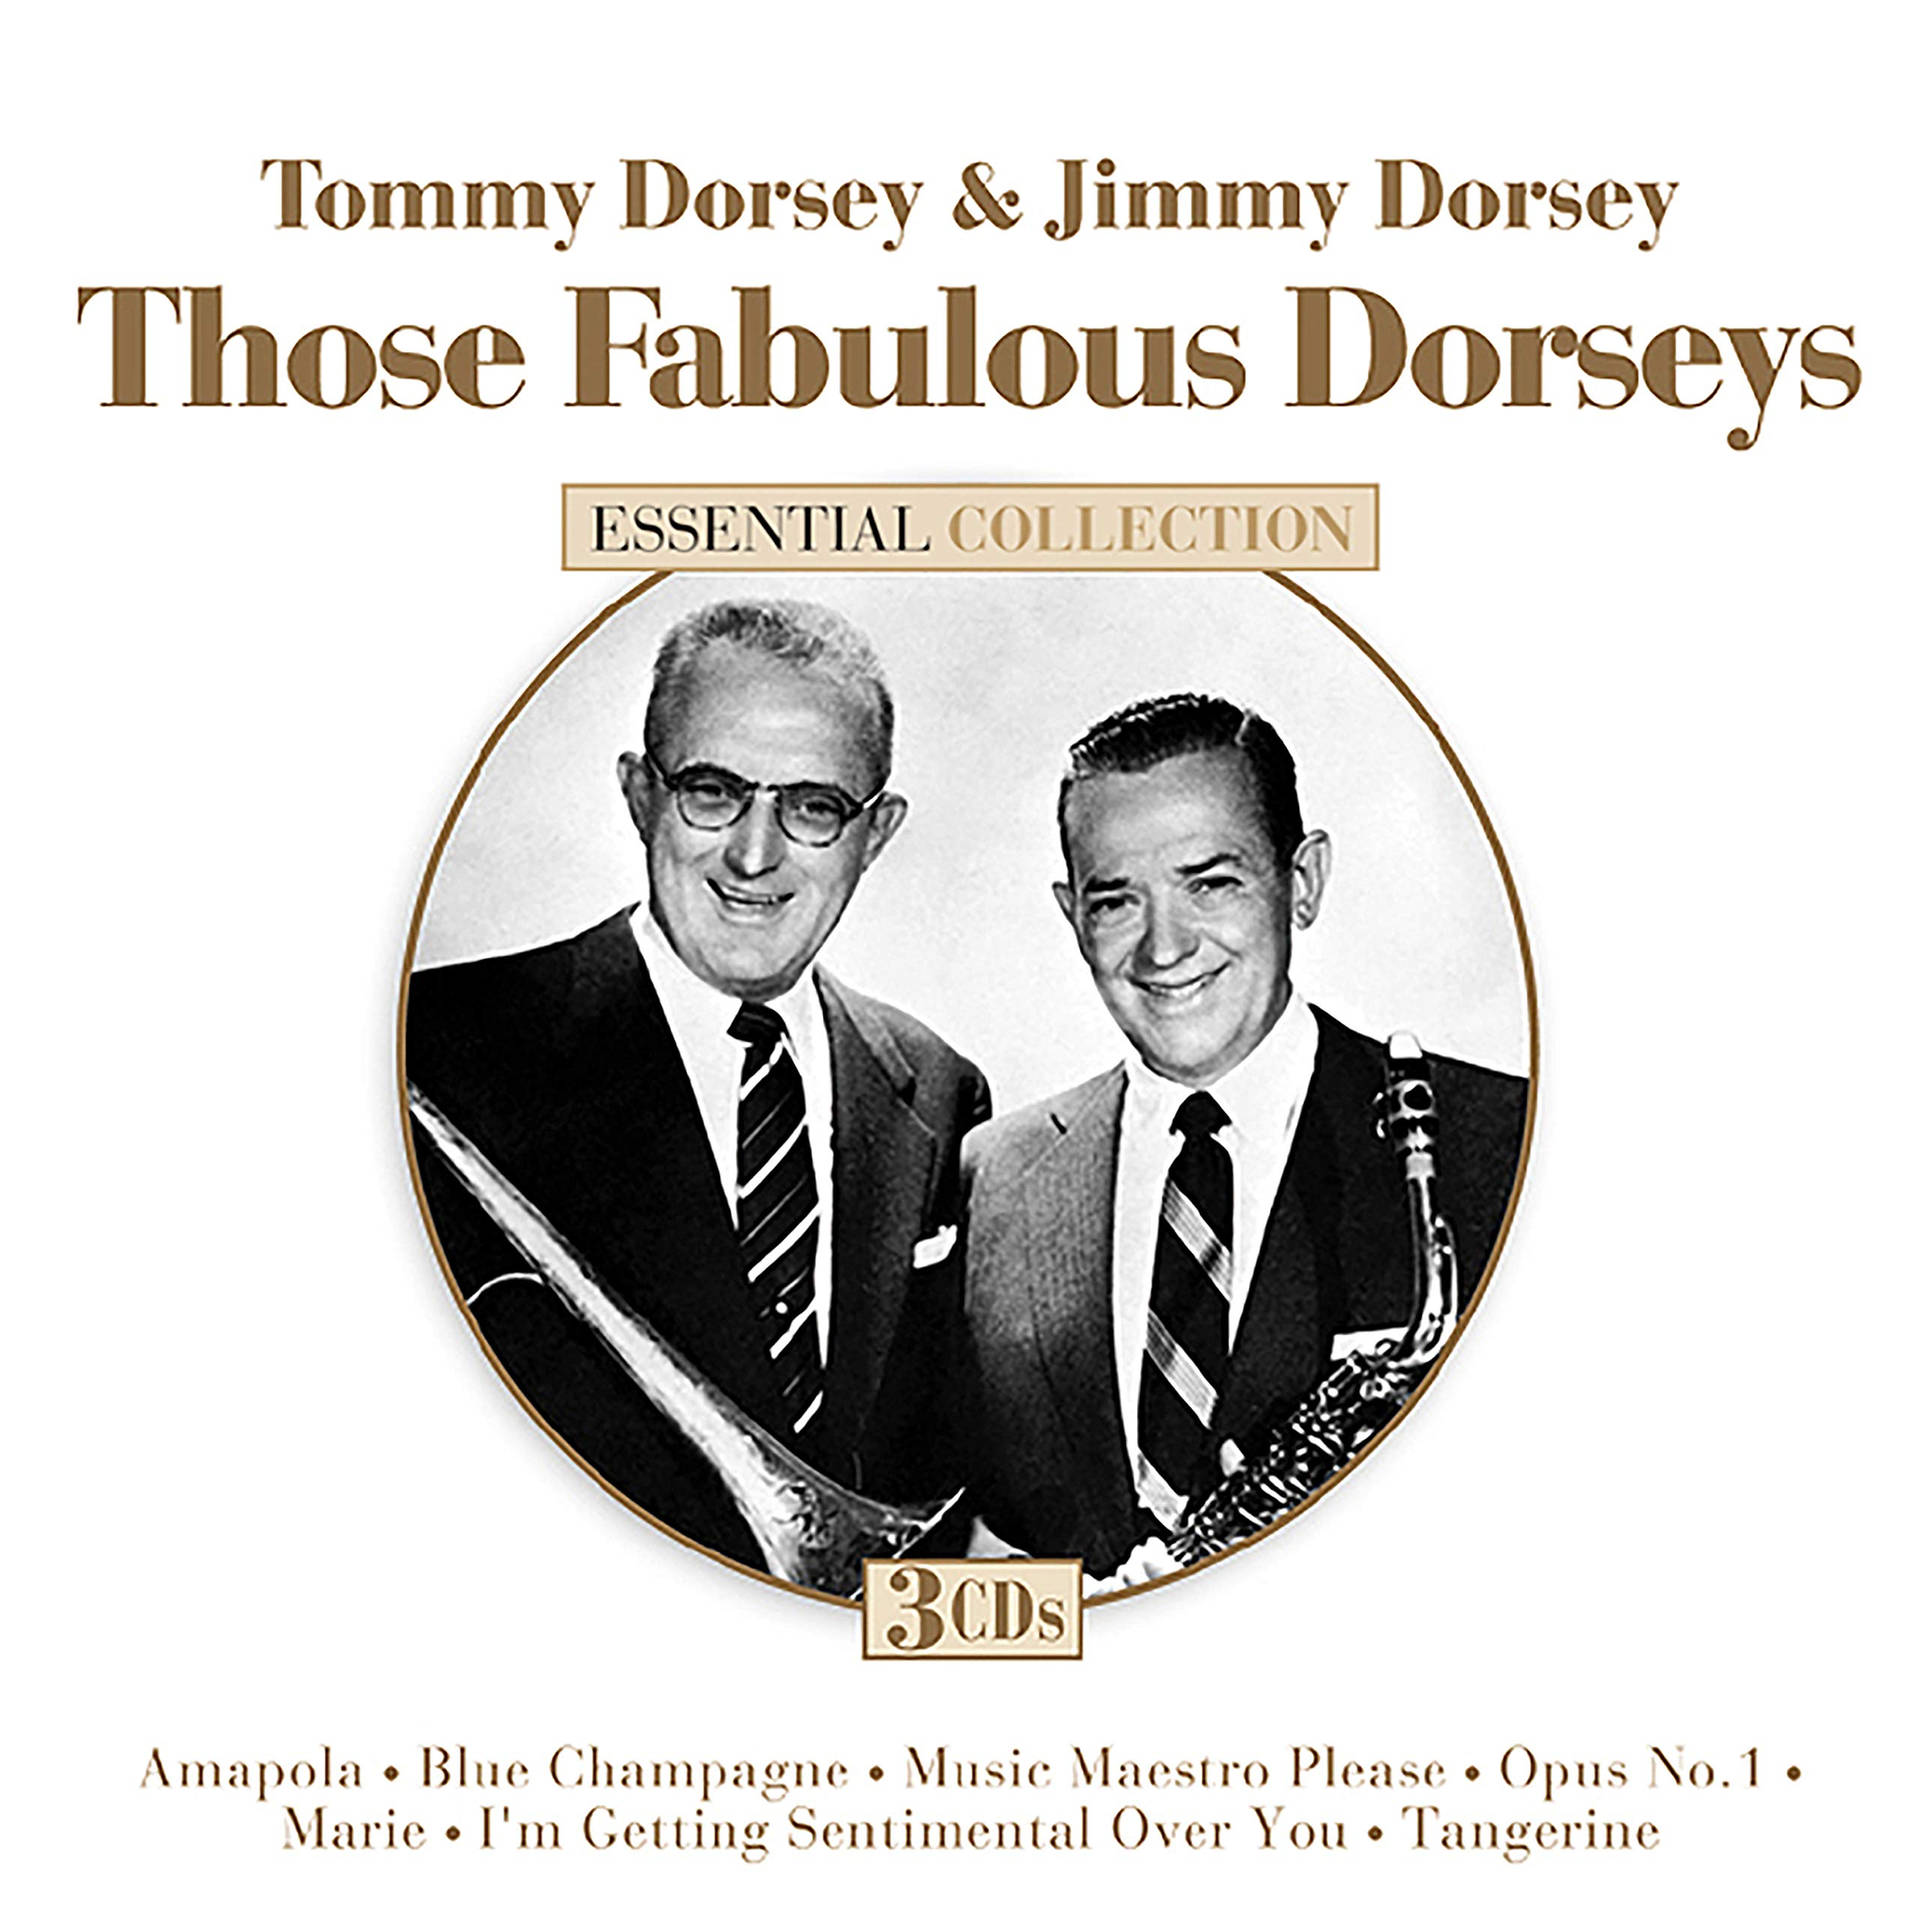 Tommy Dorsey's Those Fabulous Dorseys Album Cover Wallpaper